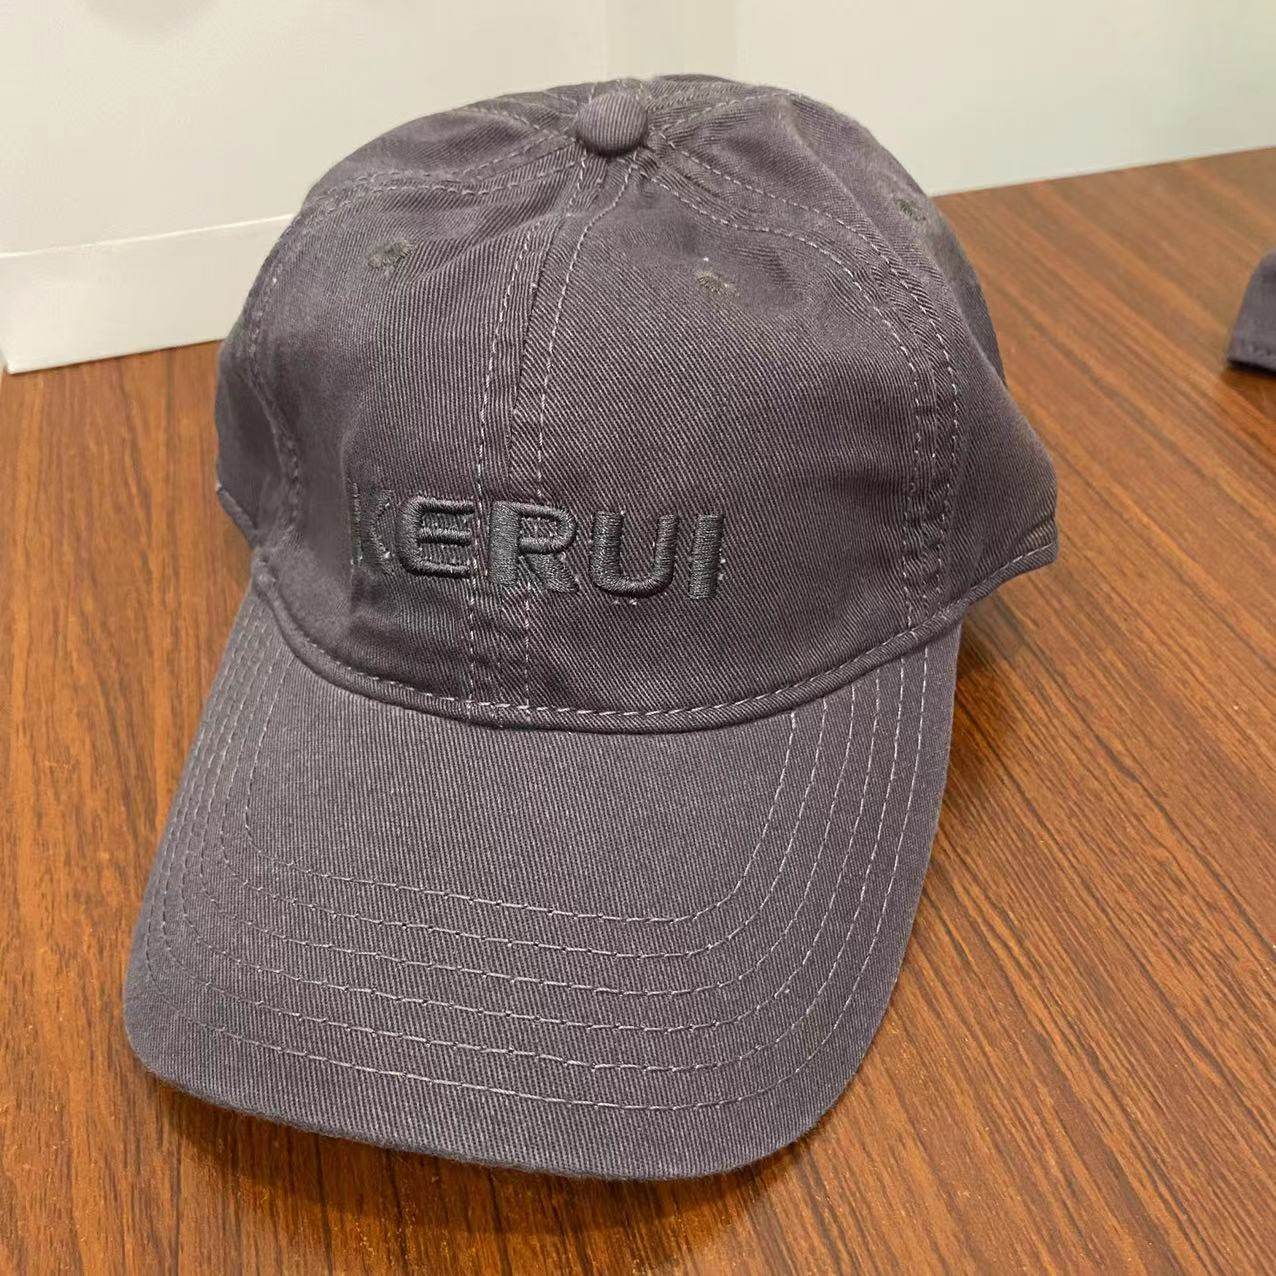 KERUI Gray Hat 100% cotton